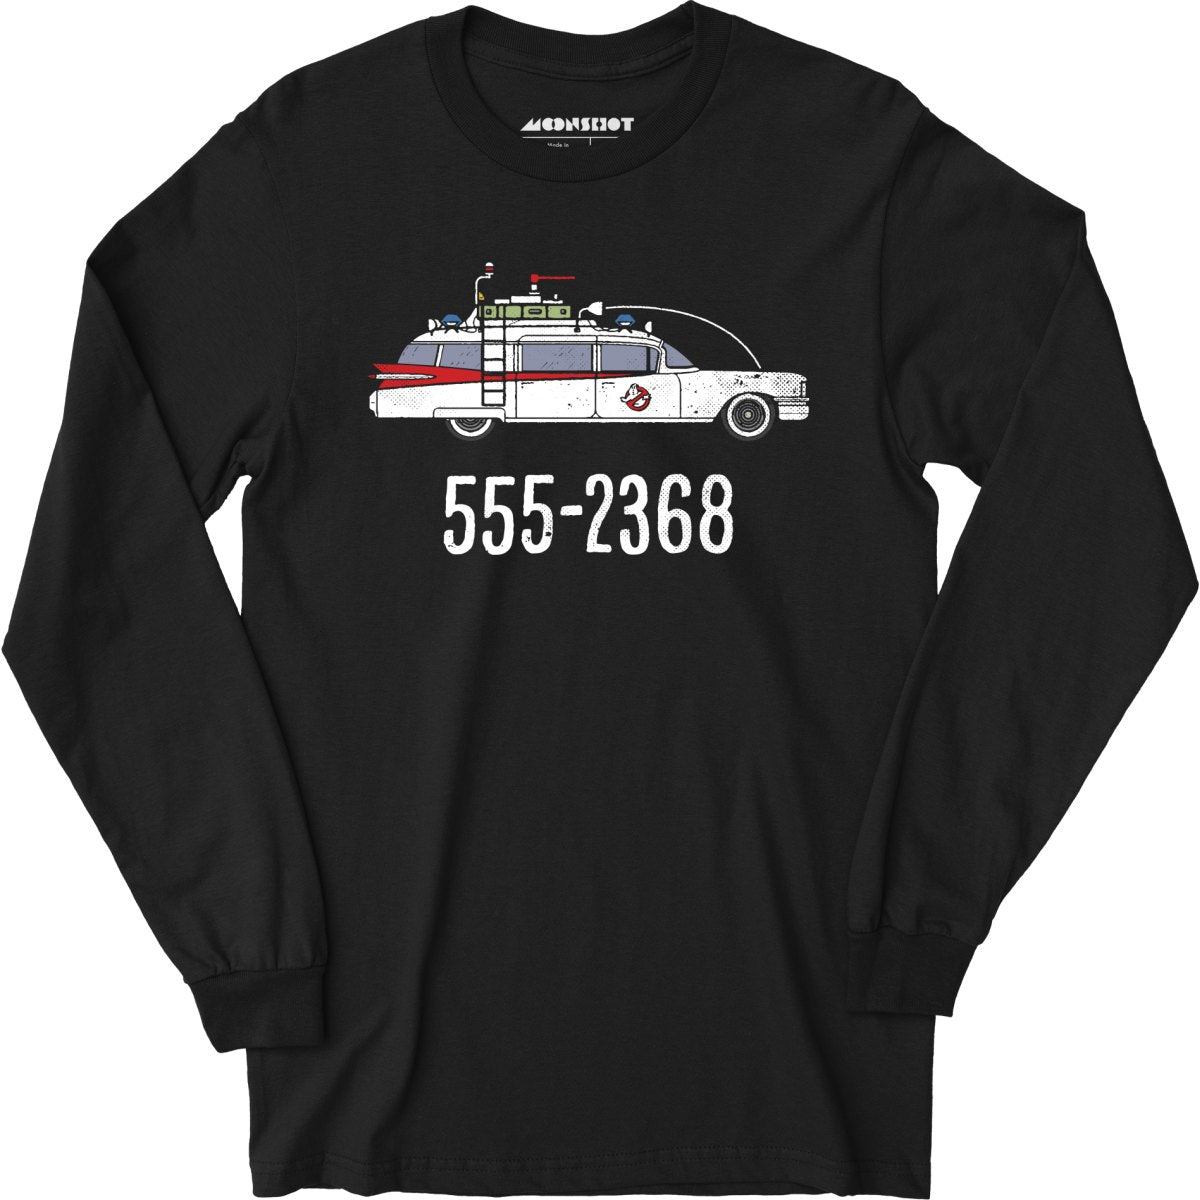 555-2368 - Long Sleeve T-Shirt